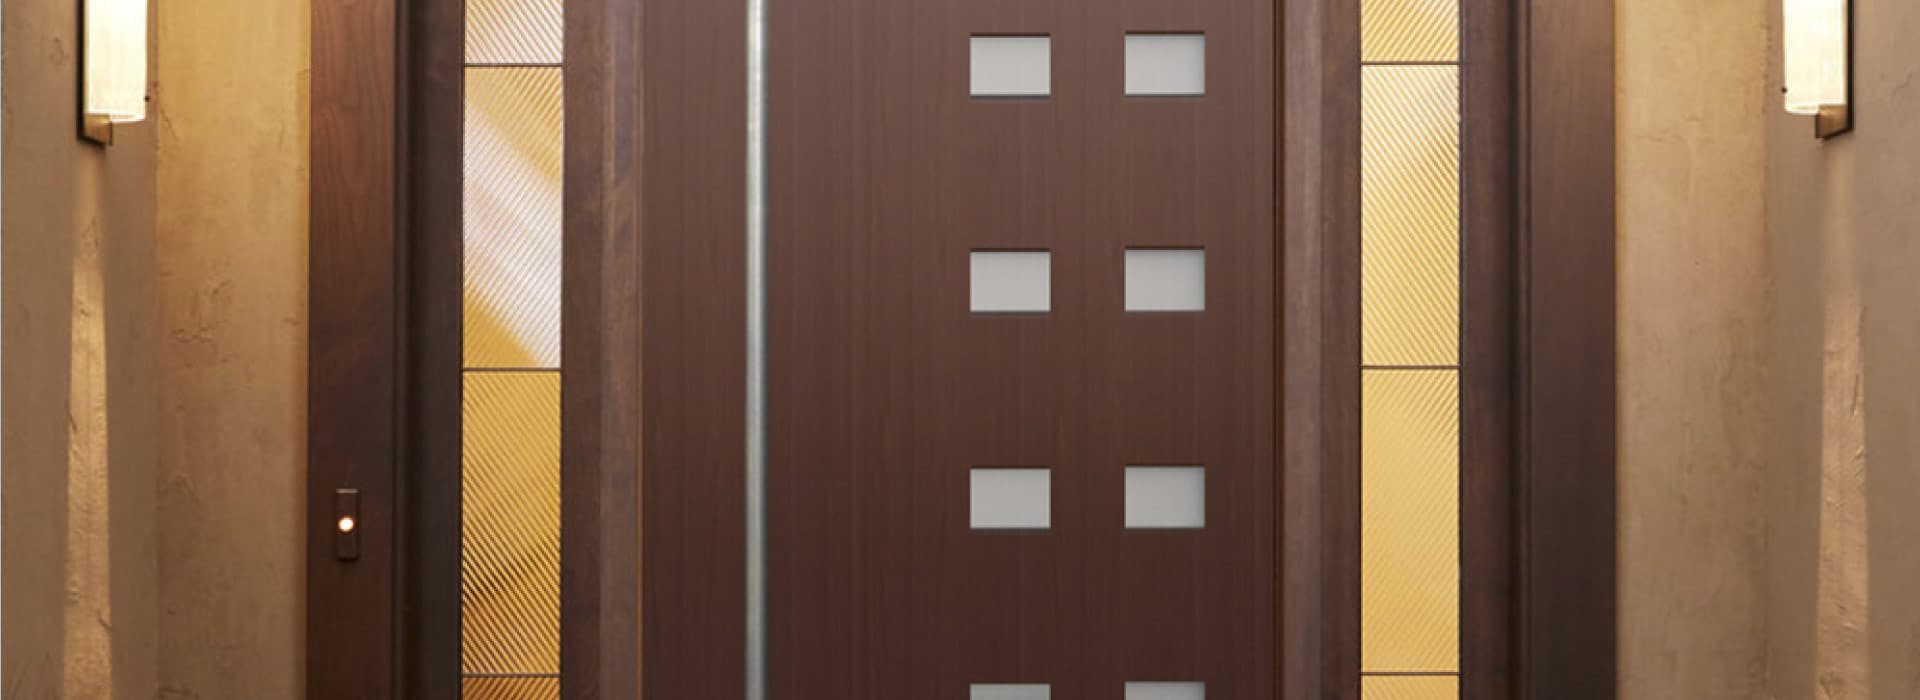 Solid Wood – S.23 Pivot Glass Door System